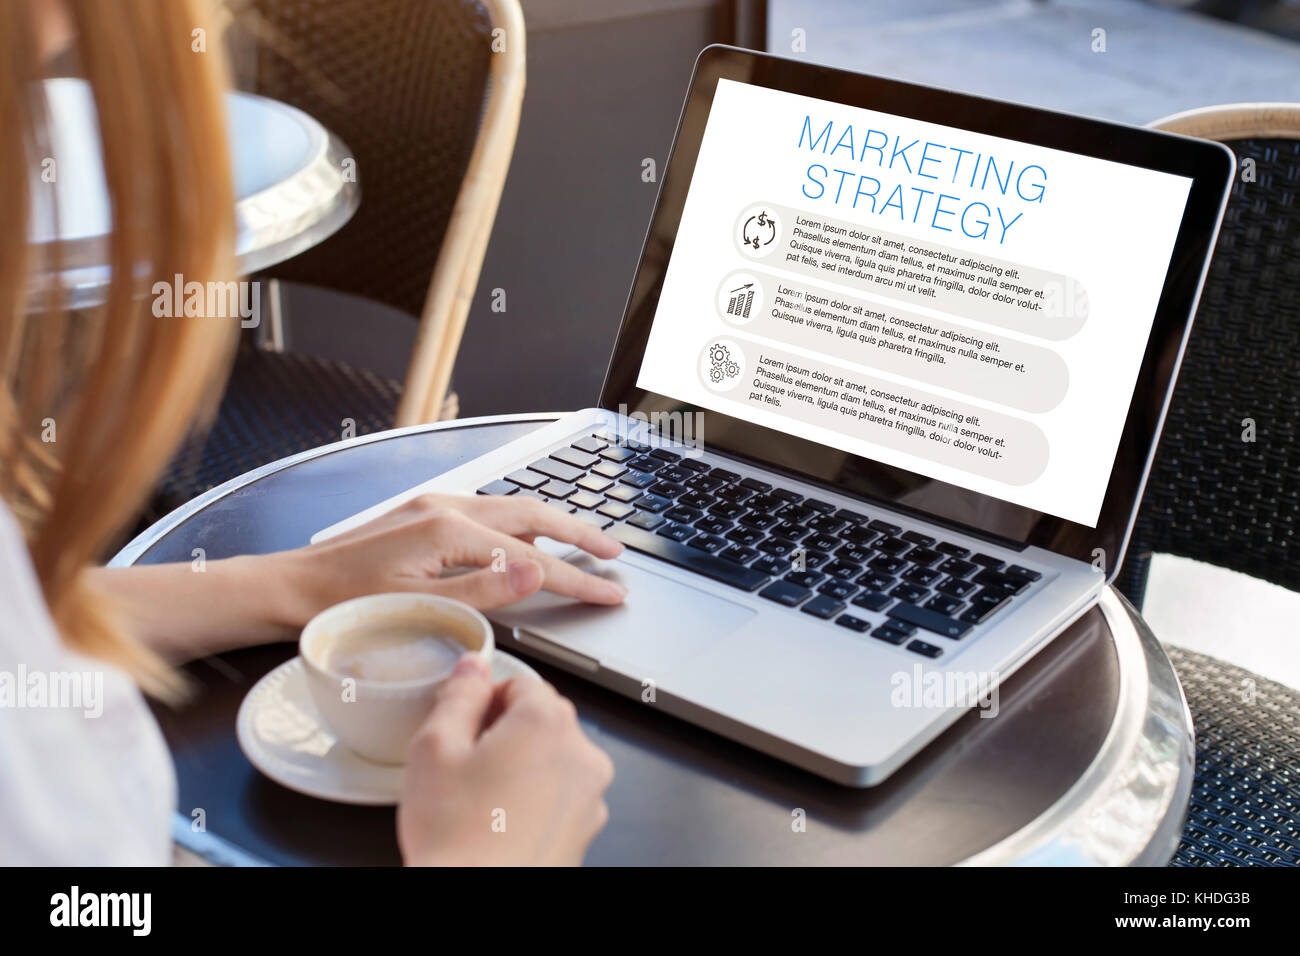 marketing strategy concept Stock Photo